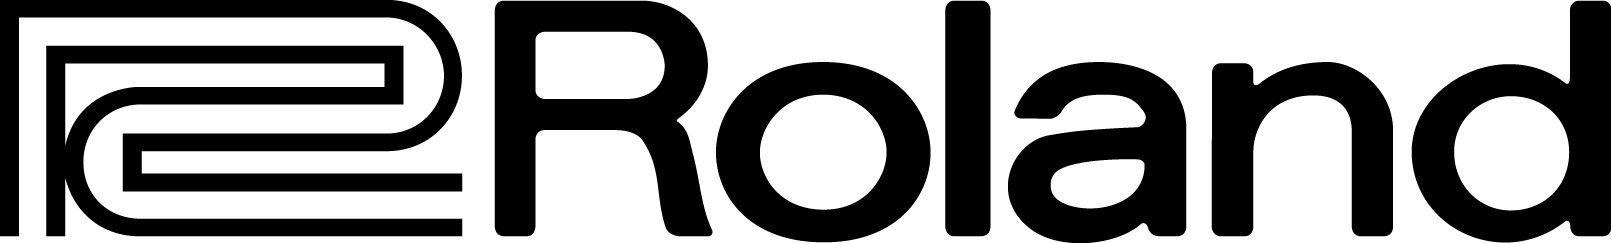 Roland Logo - Roland | Logos | Logos, Music logo, Logos design